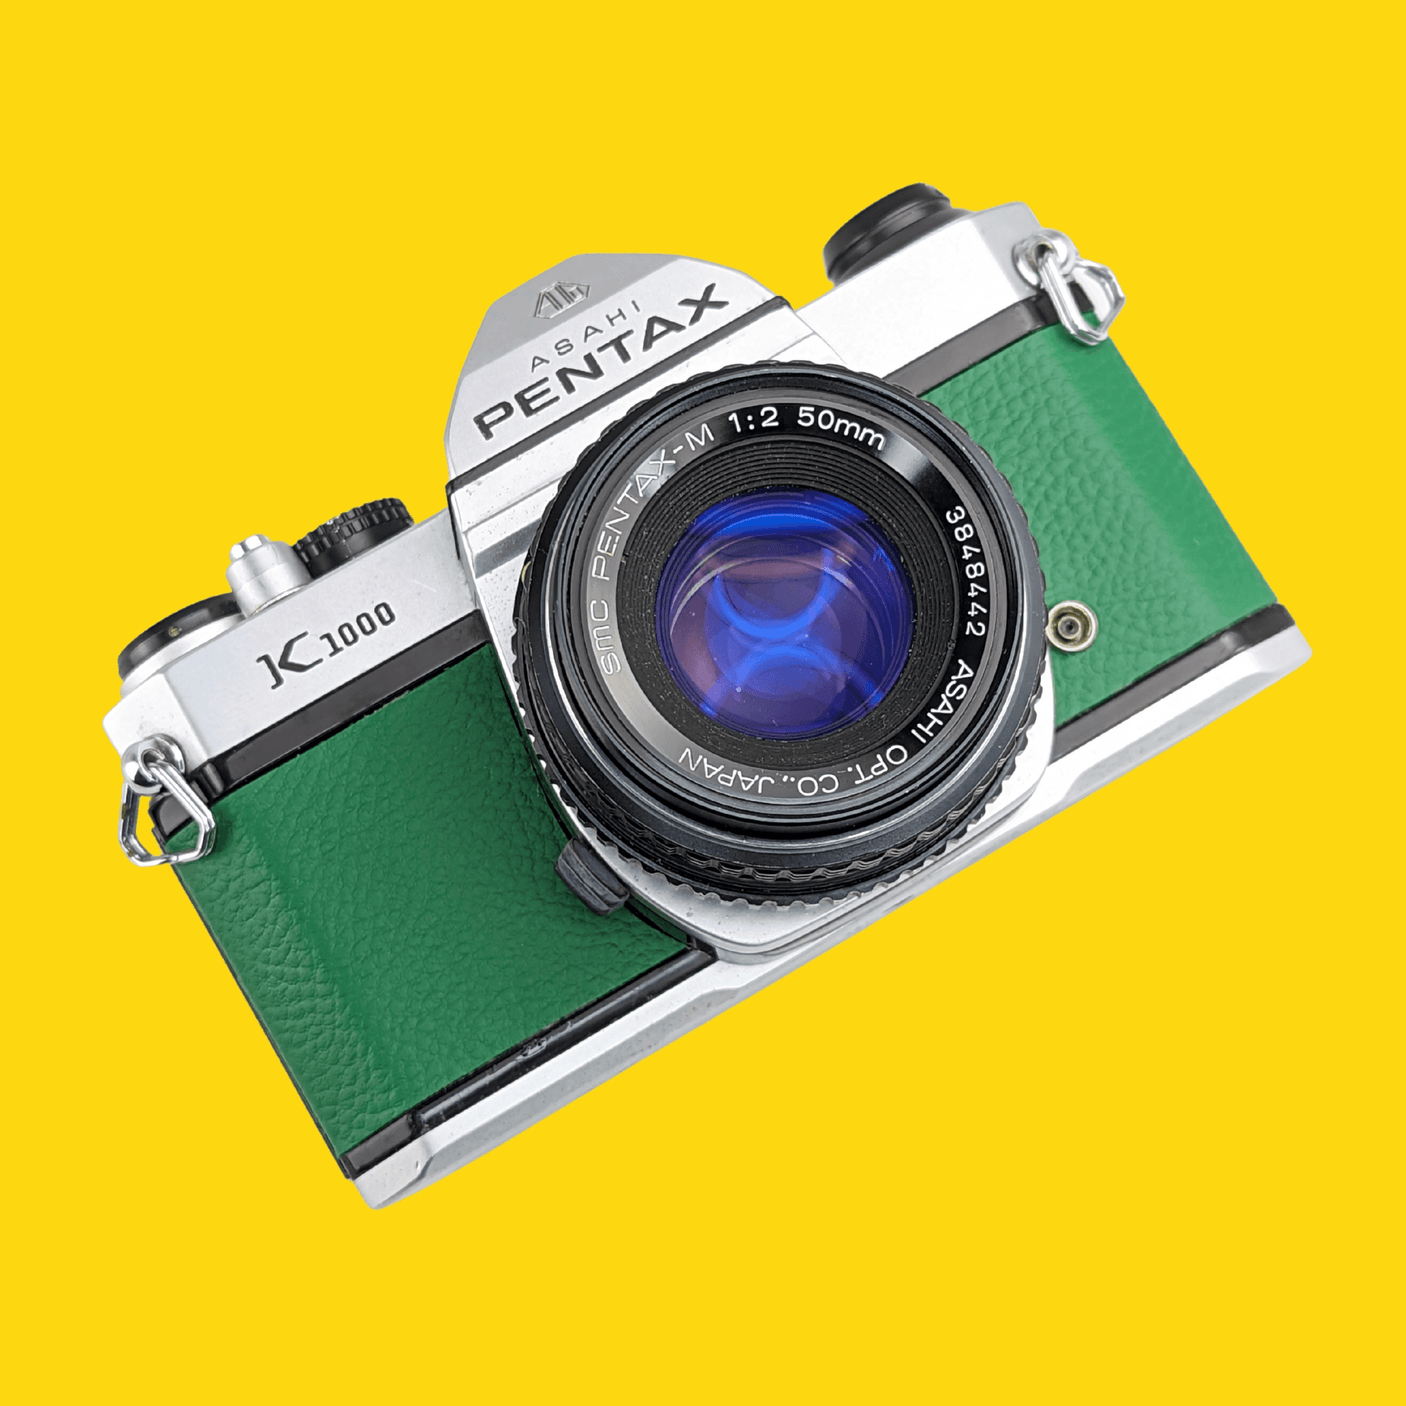 Pentax K1000 Green Leather Vintage SLR 35mm Film Camera with Pentax f/2 50mm Prime Lens